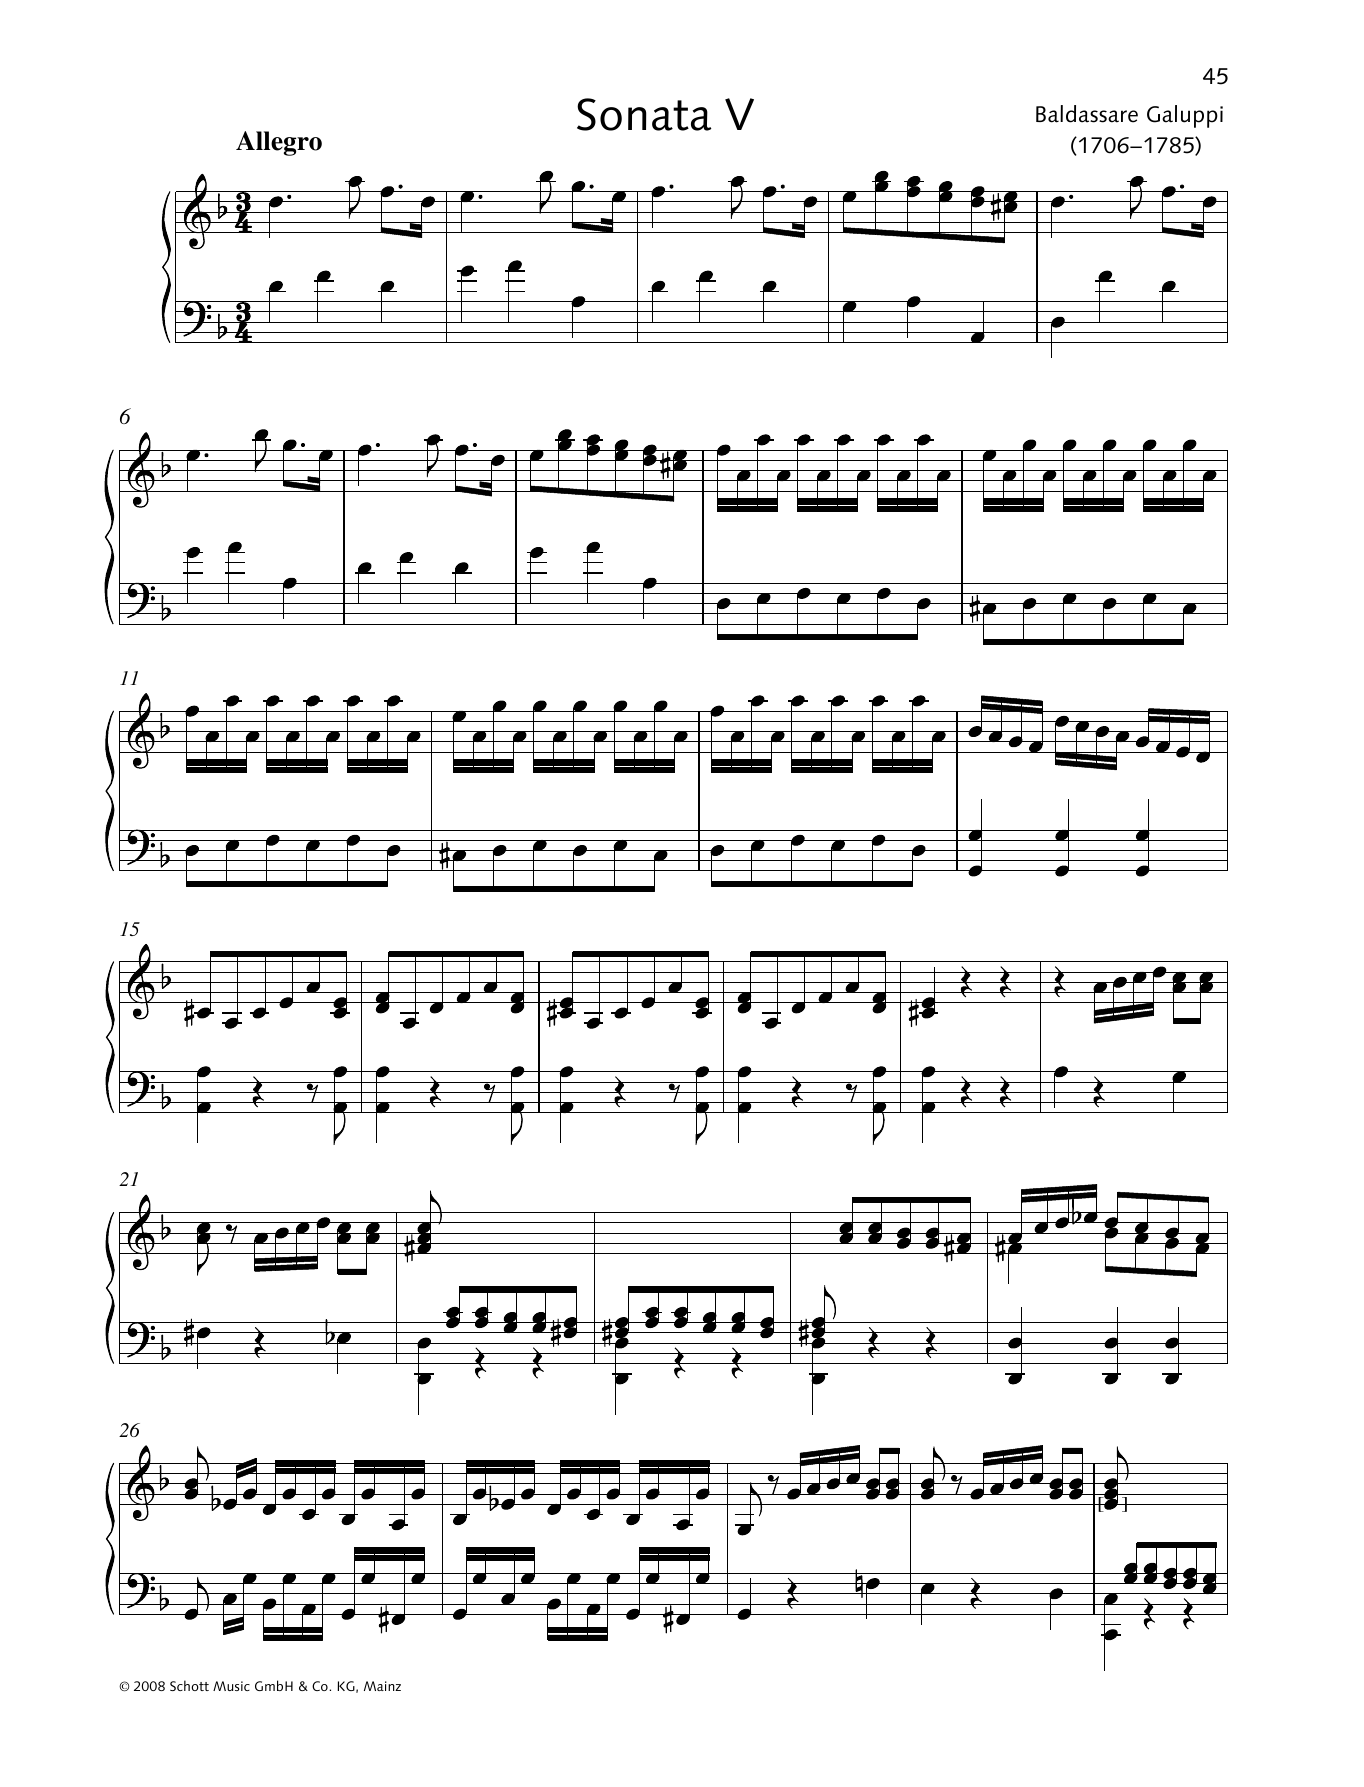 Baldassare Galuppi Sonata V D minor Sheet Music Notes & Chords for Piano Solo - Download or Print PDF